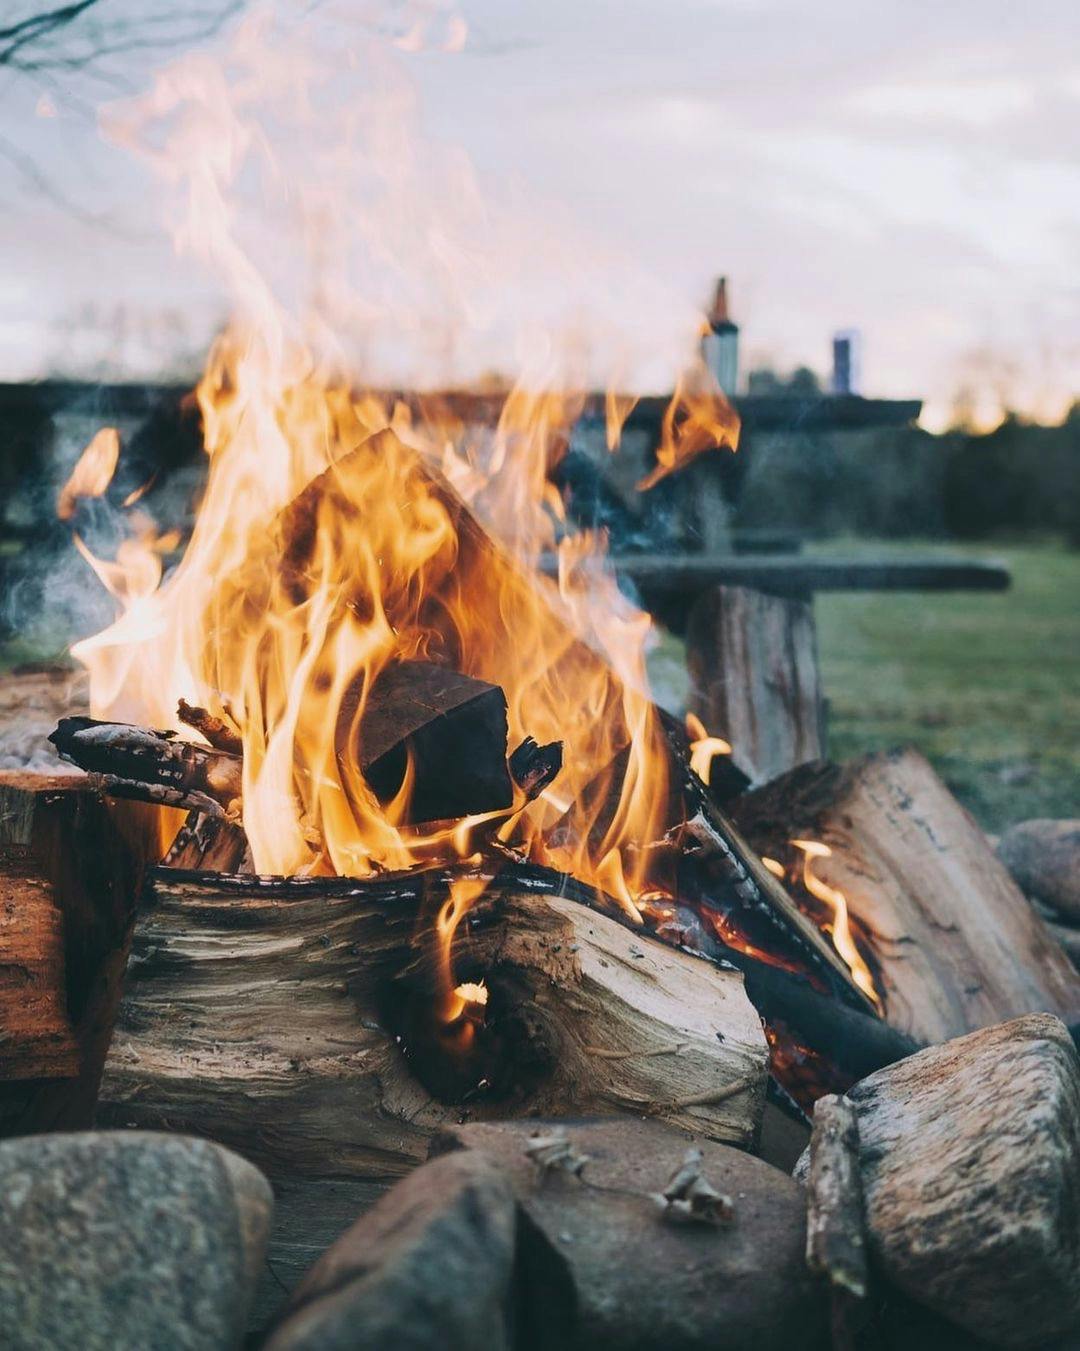 Bonfire in Iceland